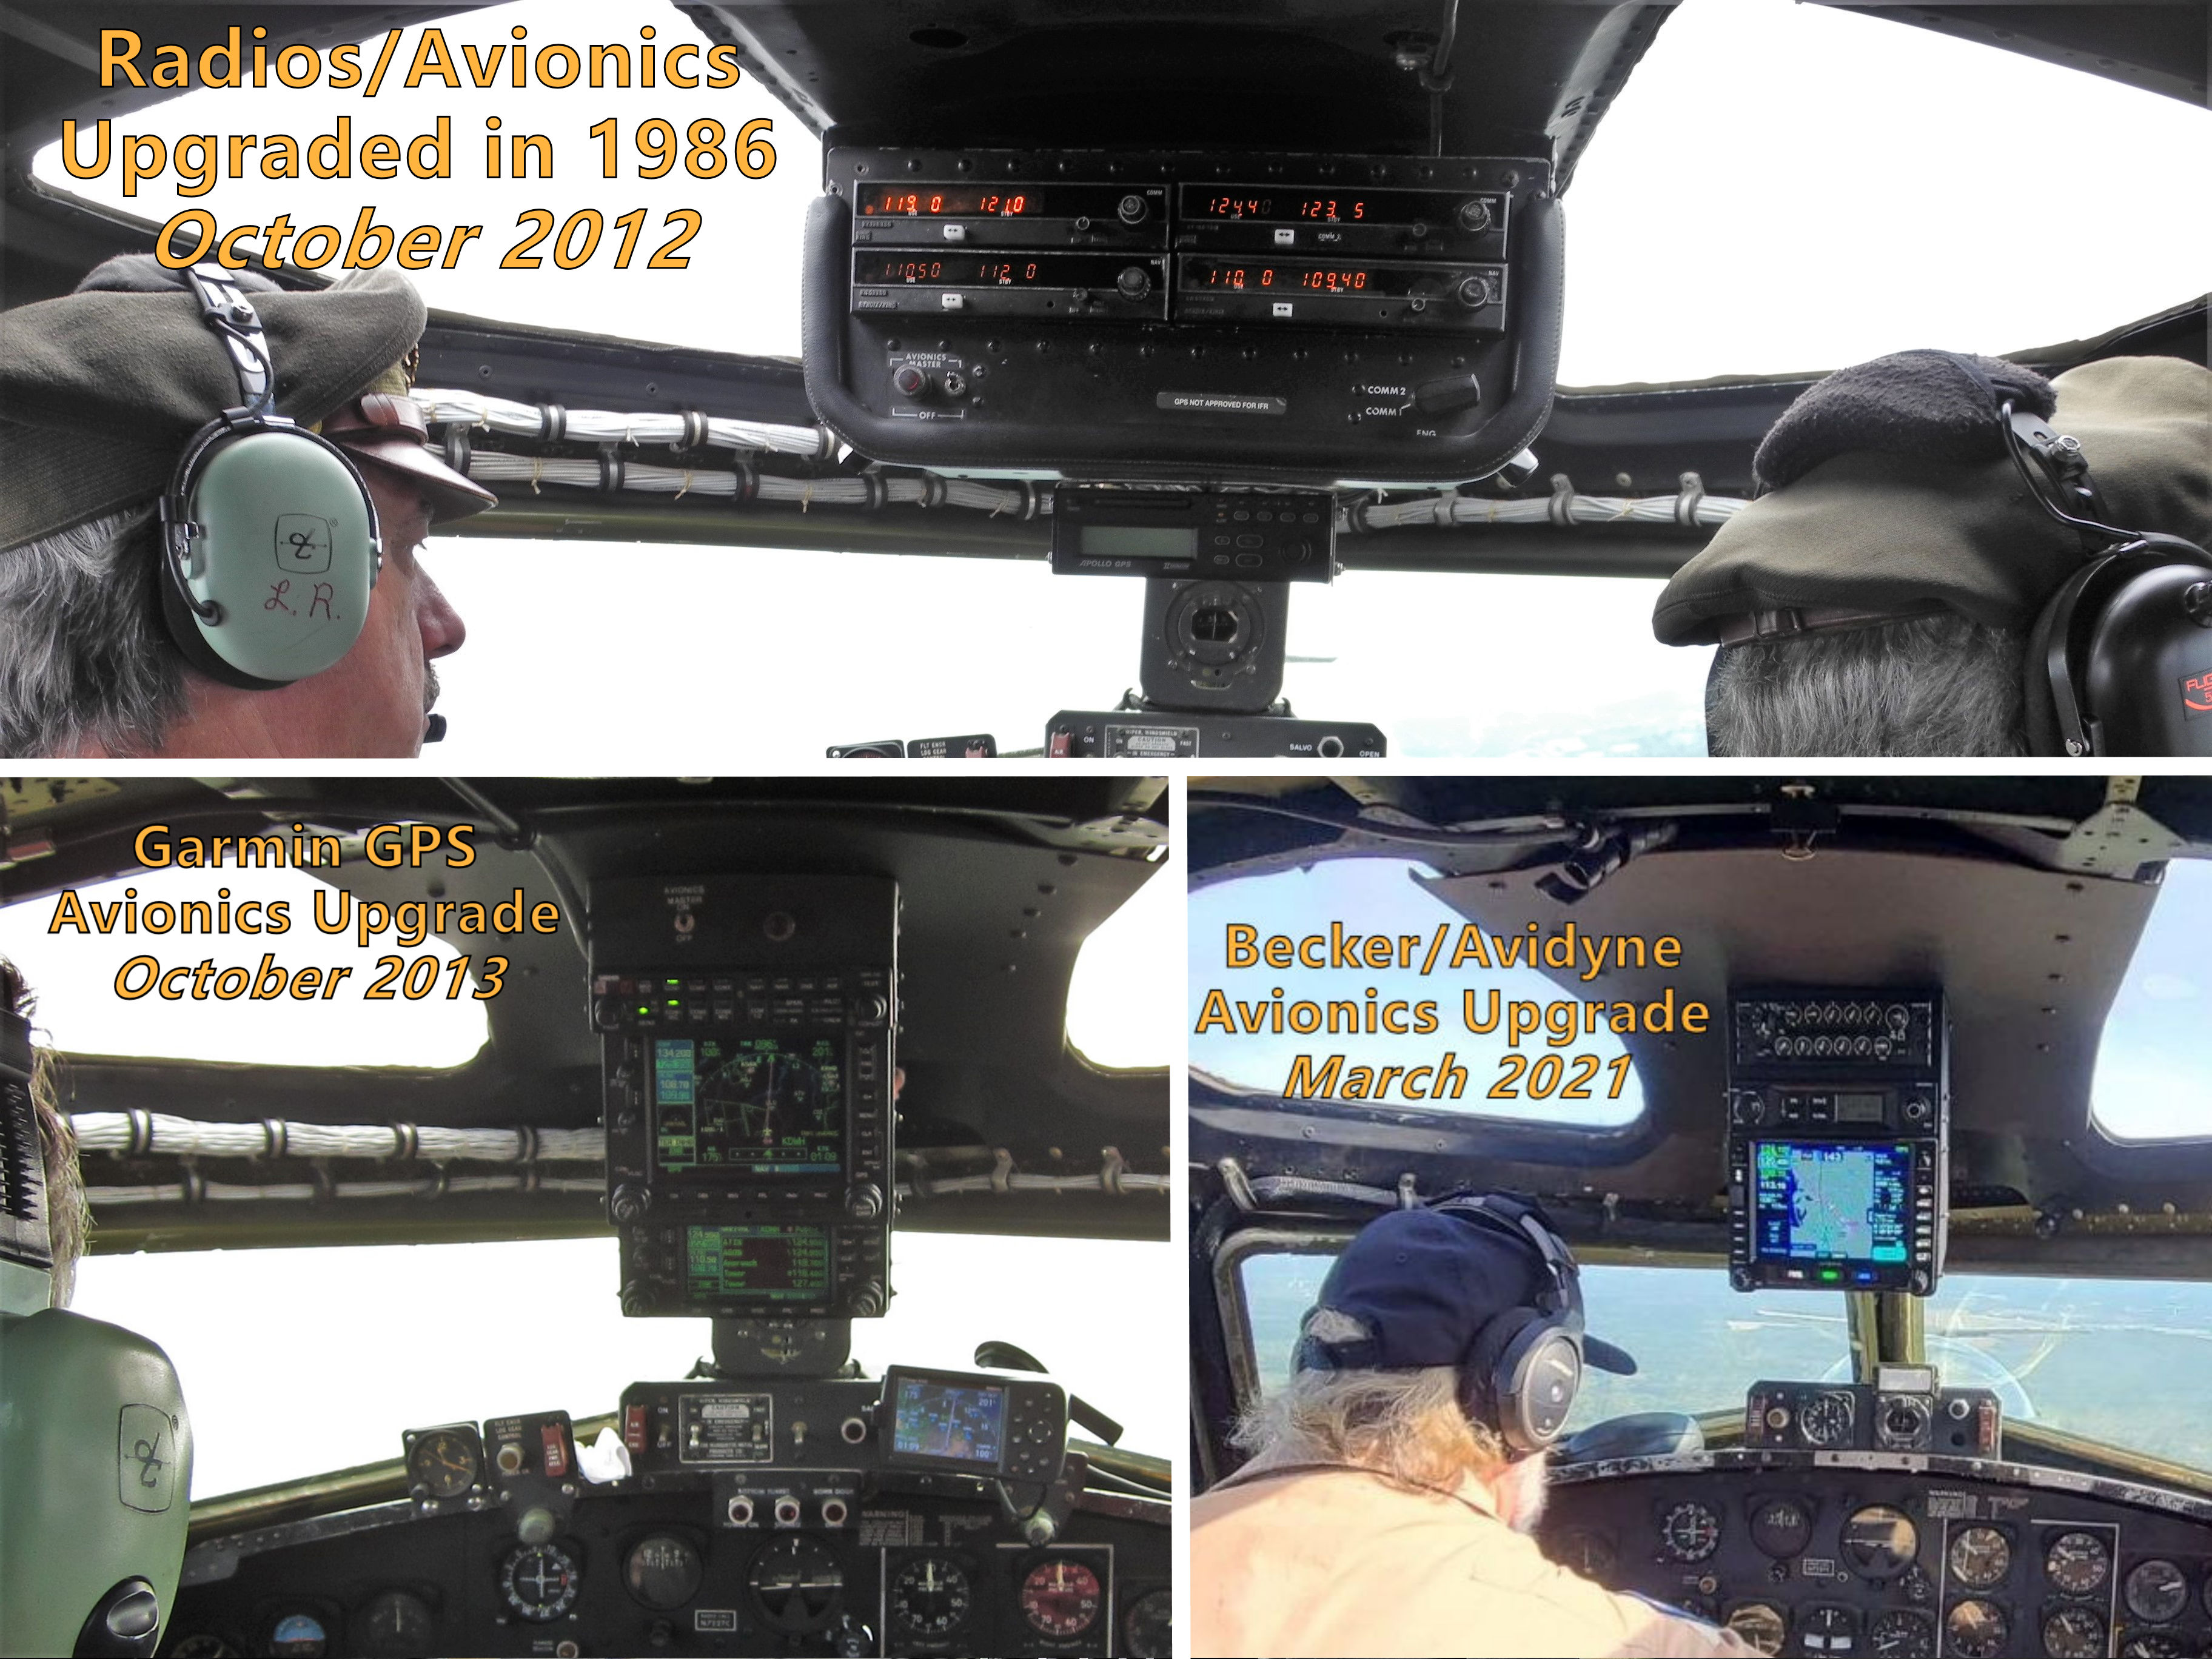     Radio/Avionics Upgrades                           